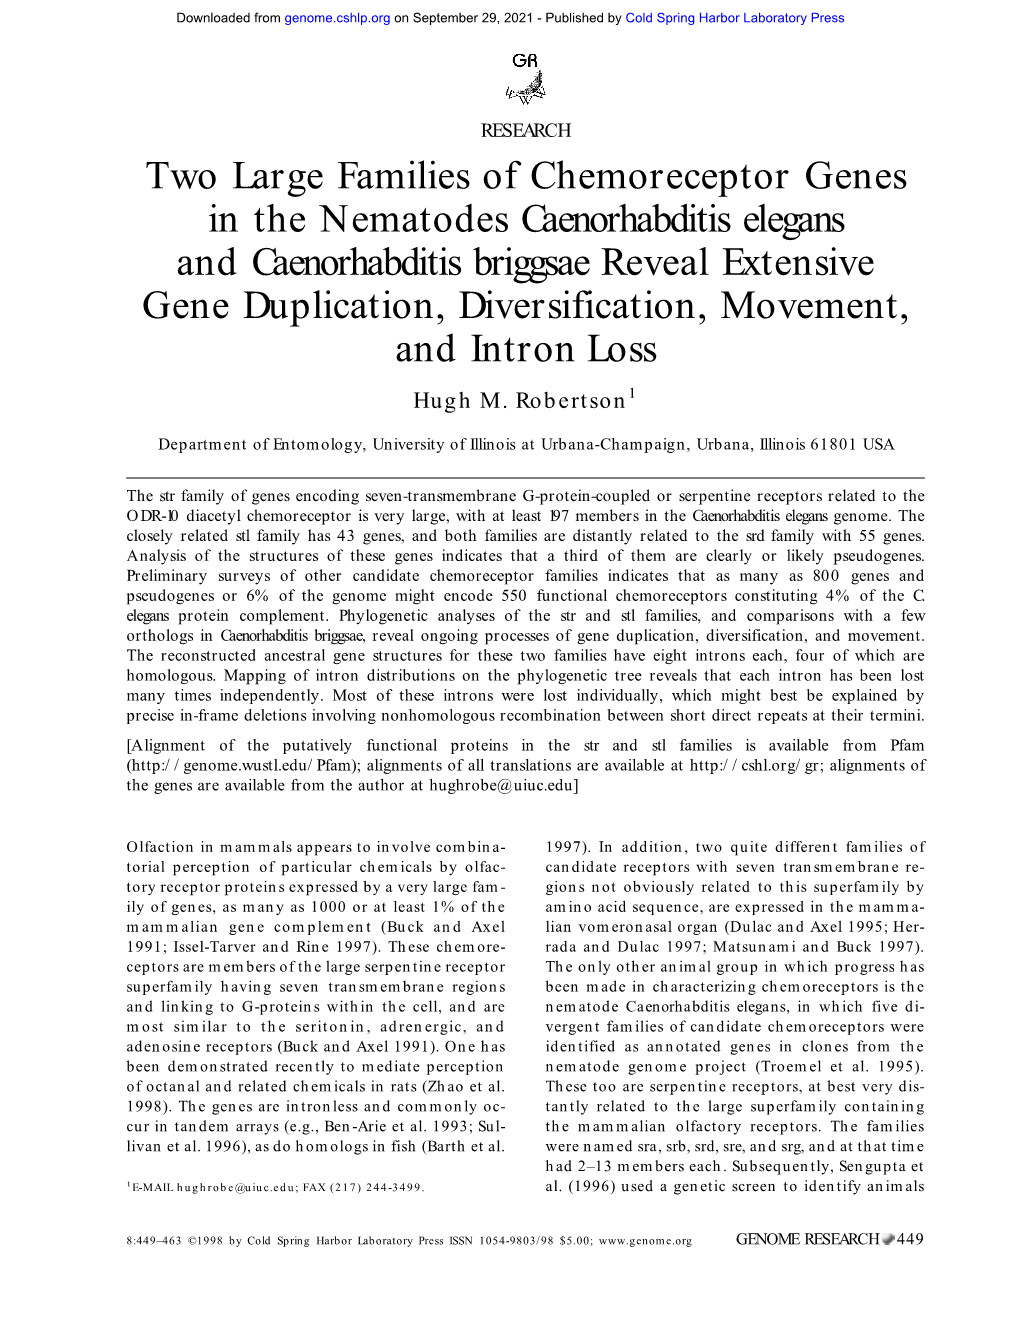 Caenorhabditis Elegans and Caenorhabditis Briggsae Reveal Extensive Gene Duplication, Diversification, Movement, and Intron Loss Hugh M